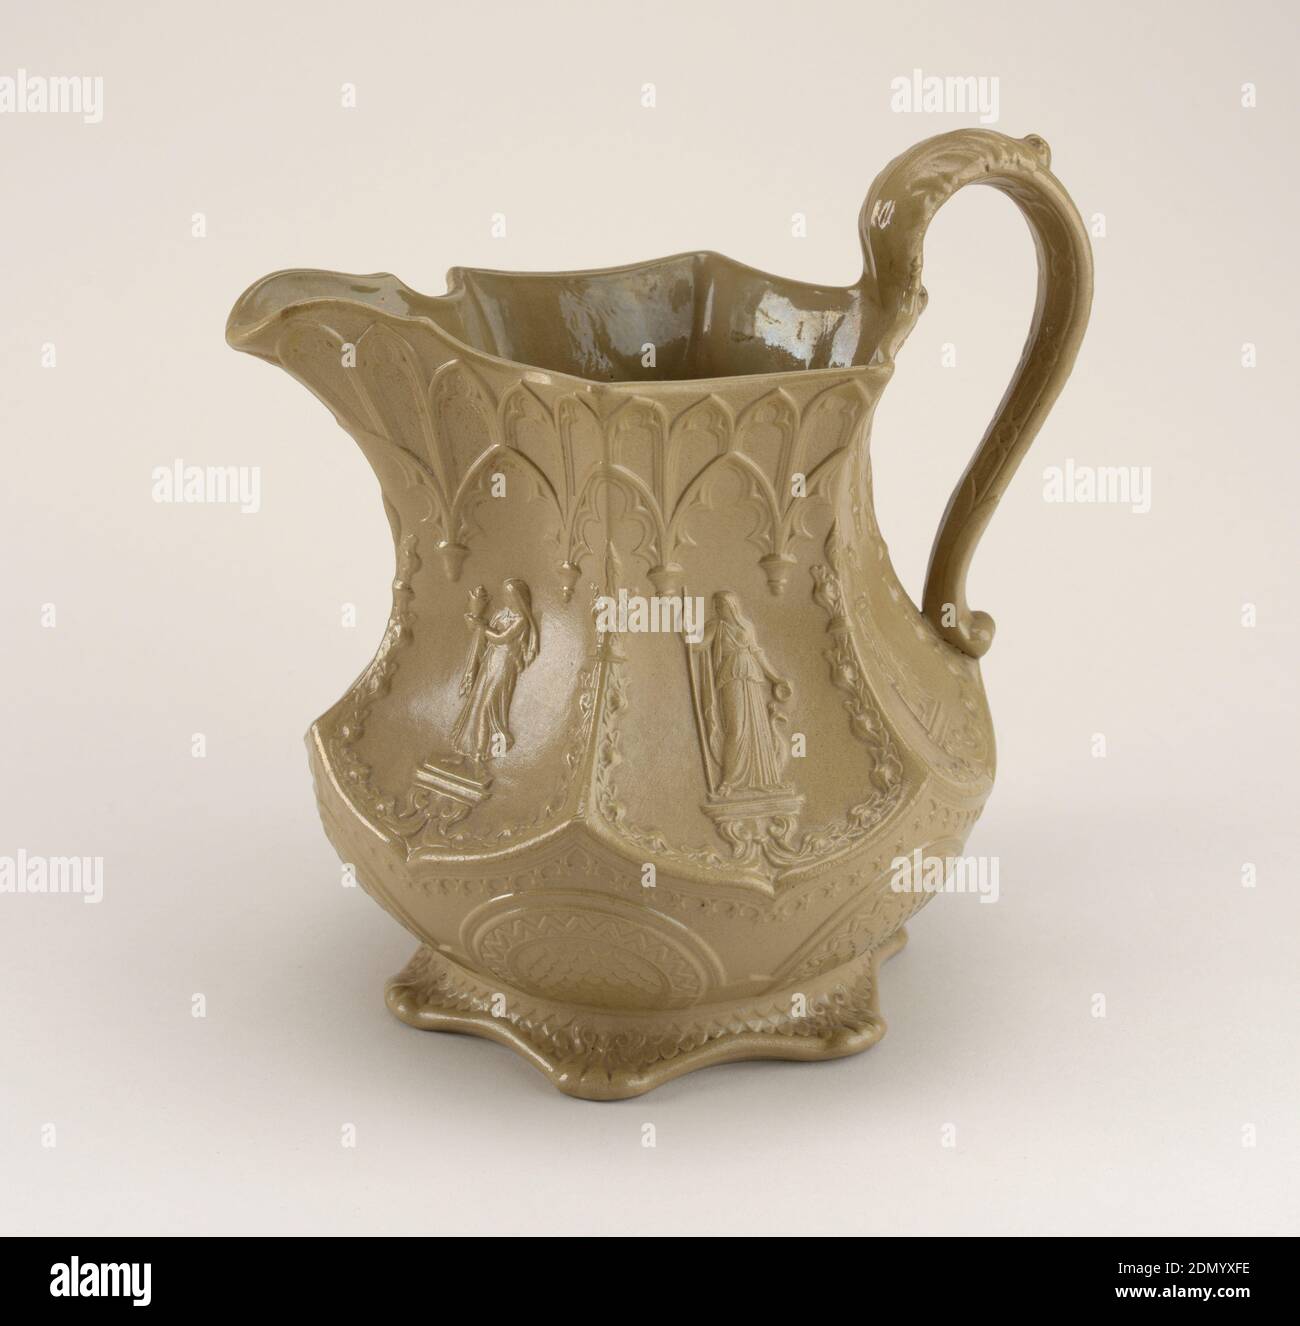 Creamer, Wedgwood, English, established 1759, jasperware, salt glaze, early 19th century, ceramics, Decorative Arts Stock Photo